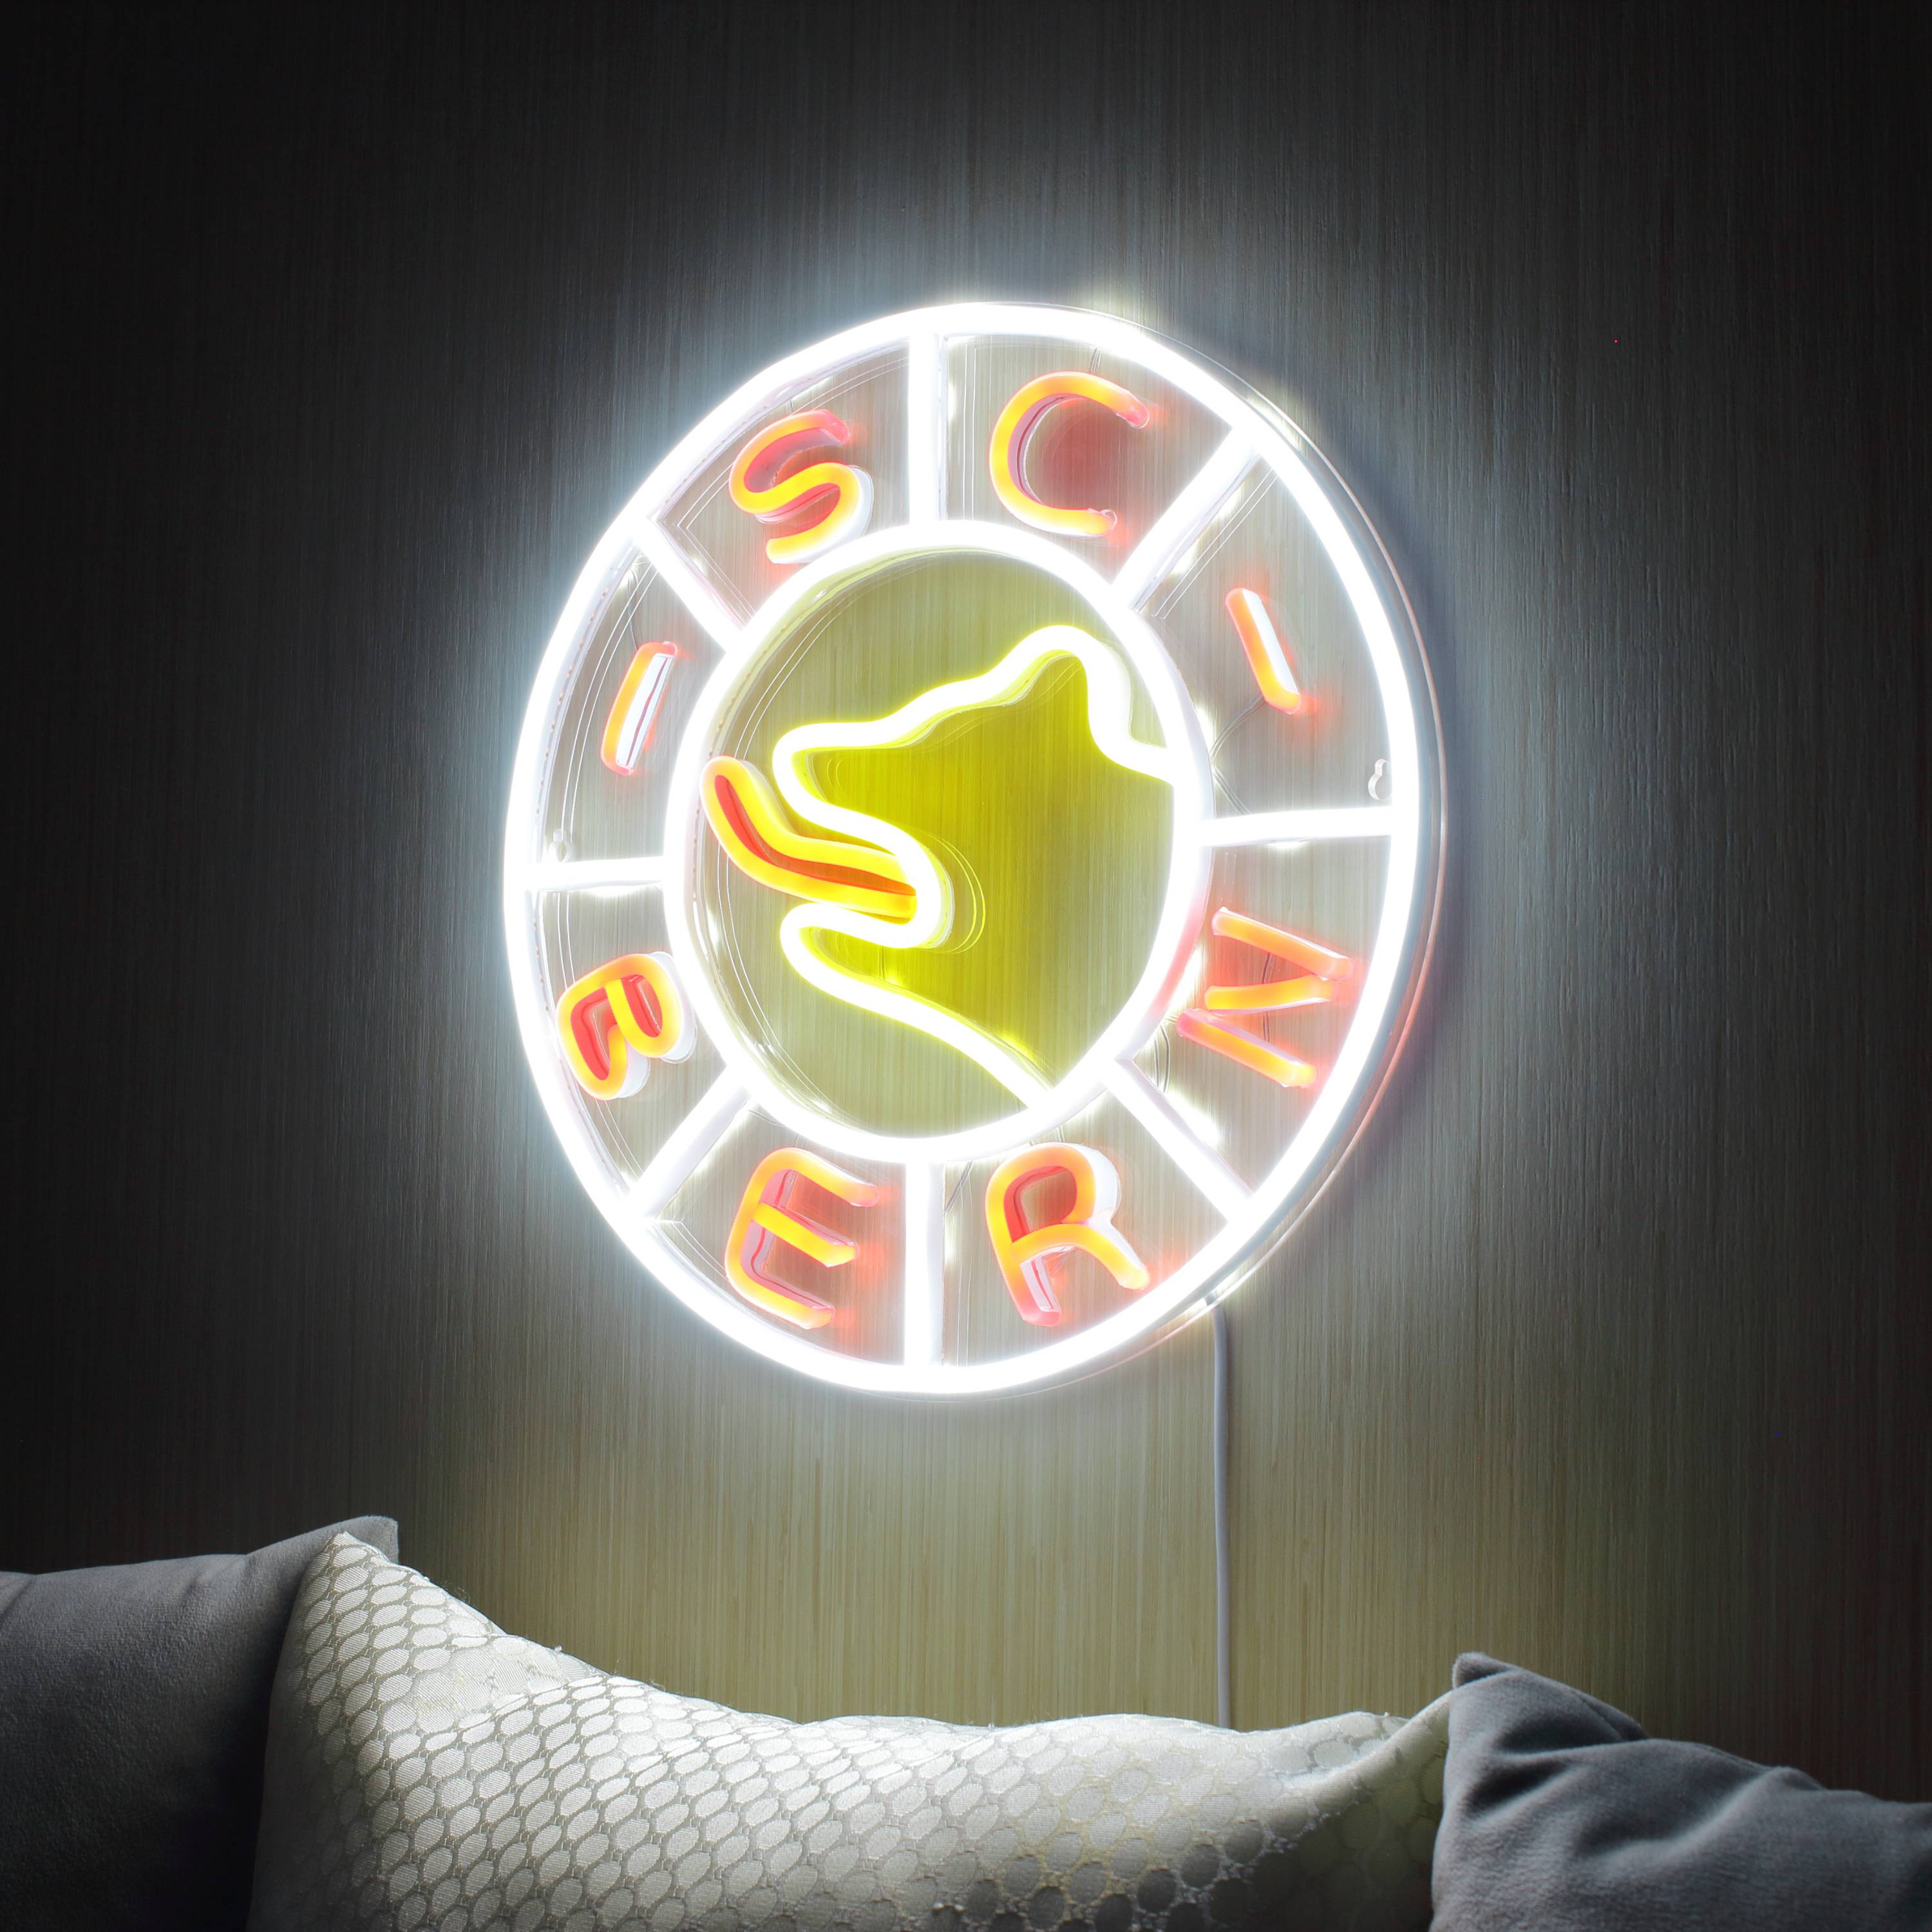 SC Bern LED Neon Sign